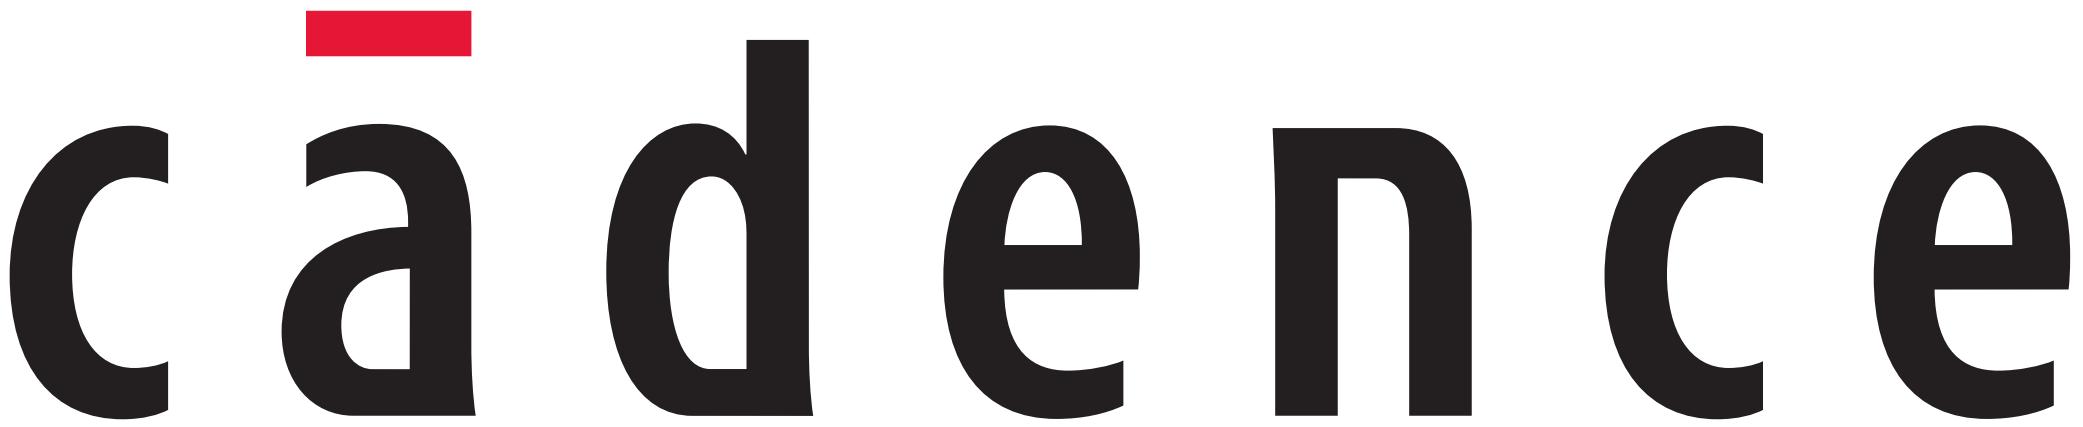 cadence logo